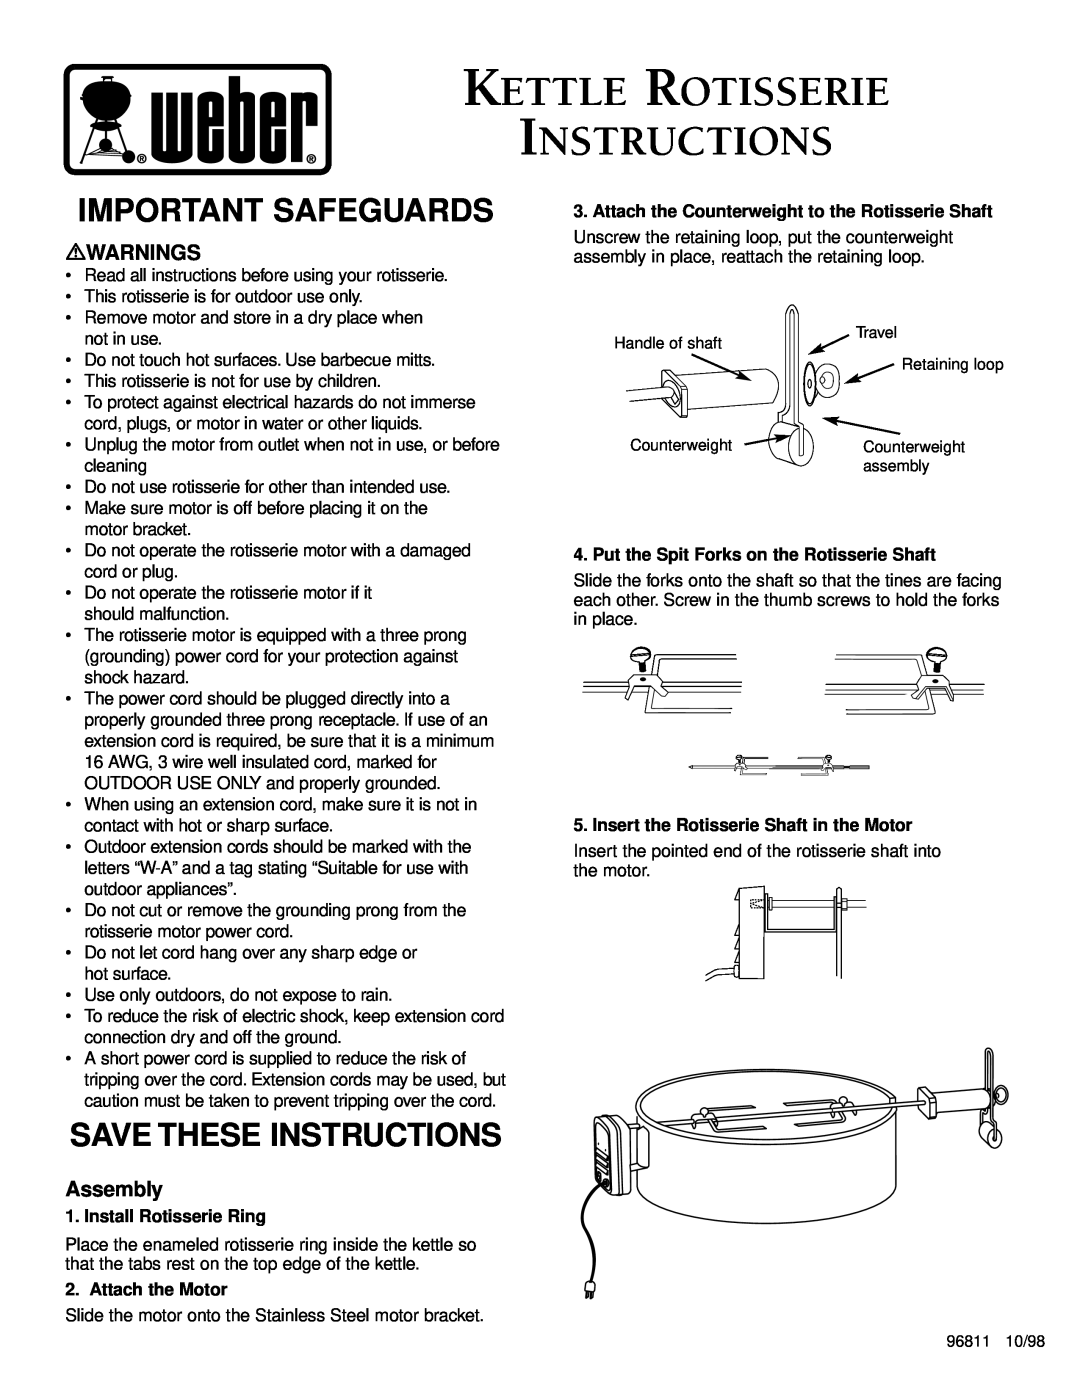 Weber 96811 manual Kettle Rotisserie Instructions, mWARNINGS, Assembly, Install Rotisserie Ring, Attach the Motor 